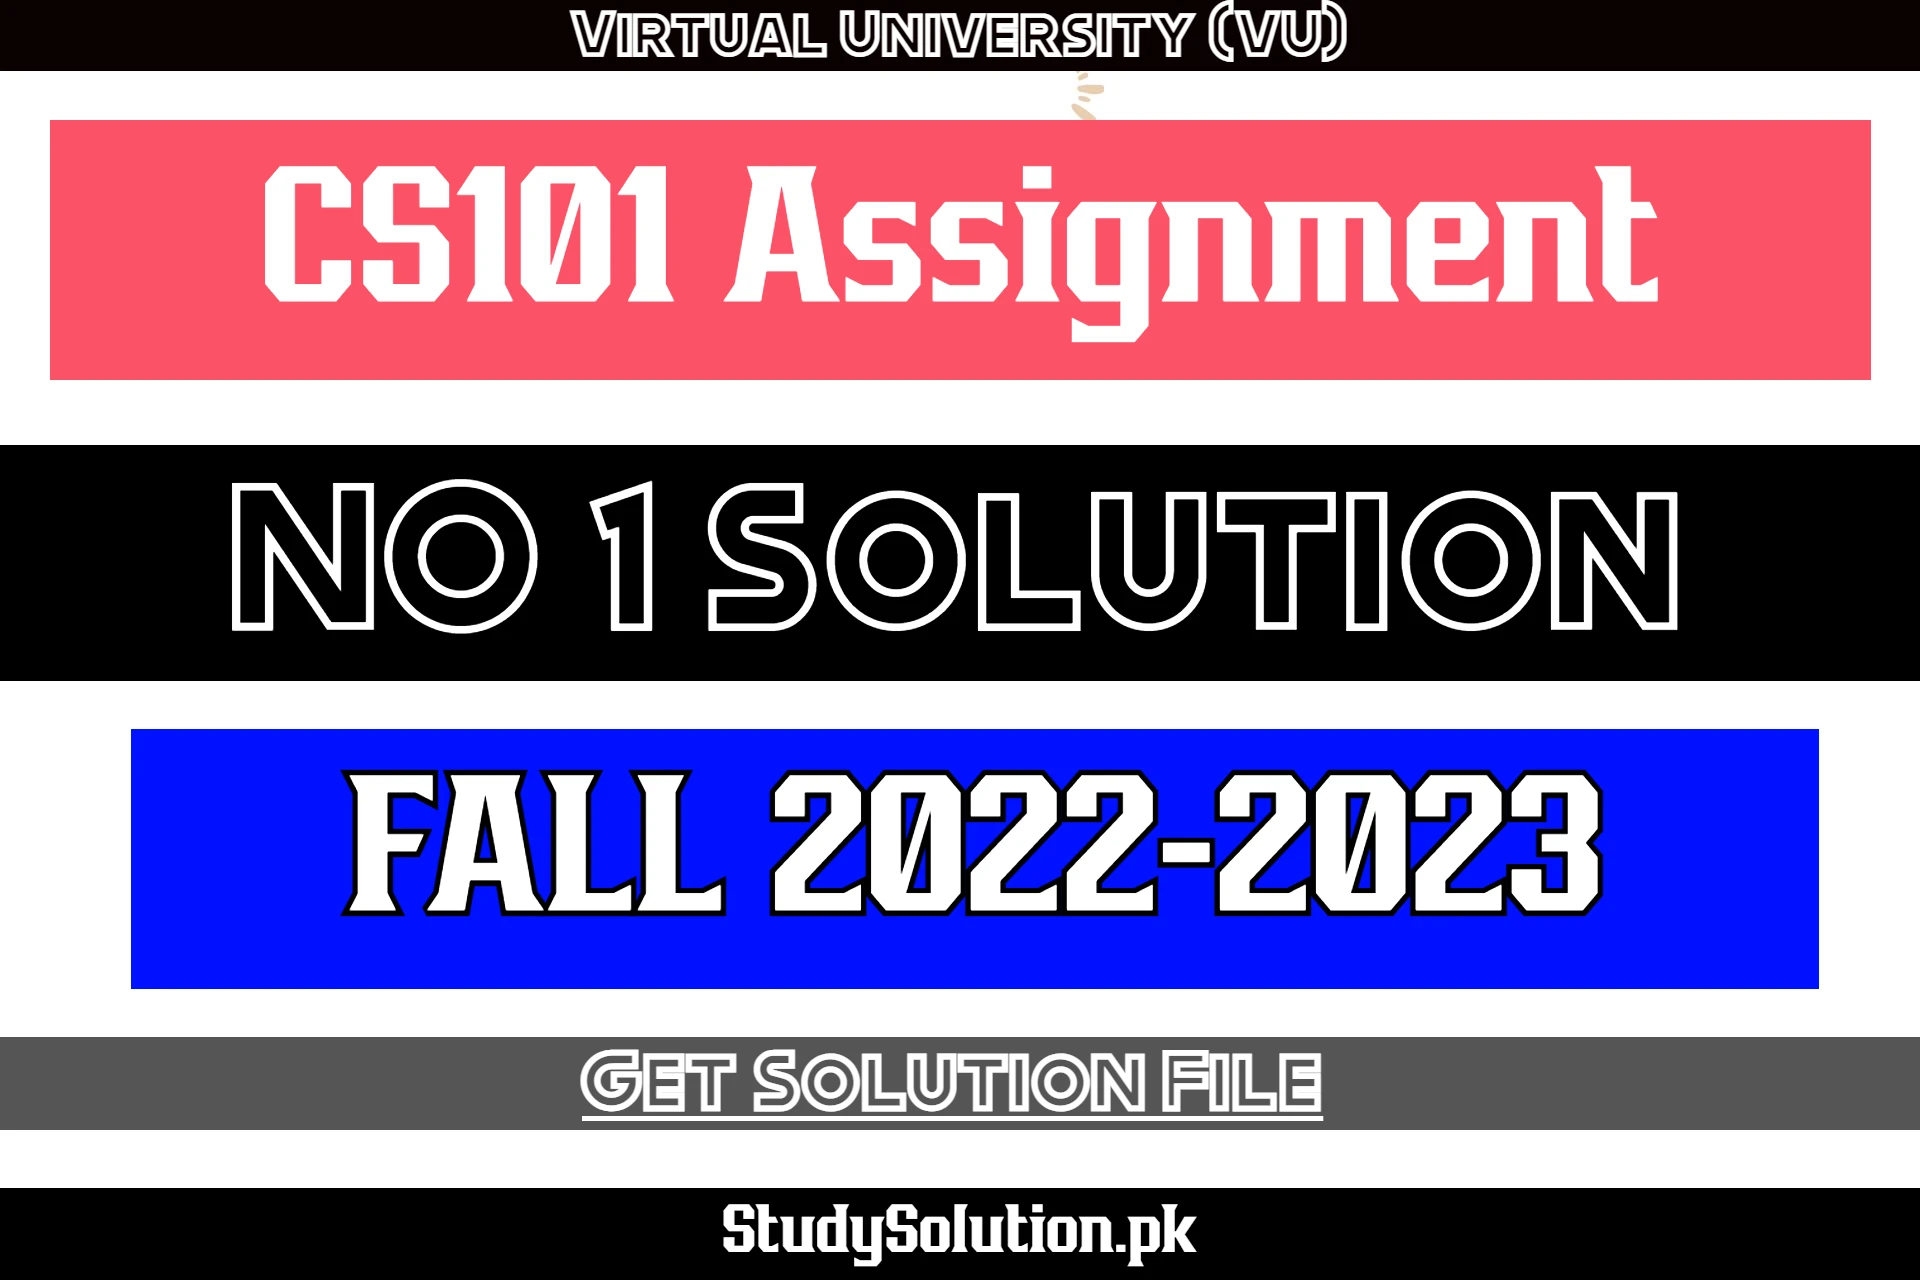 CS101 Assignment No 1 Solution Fall 2022